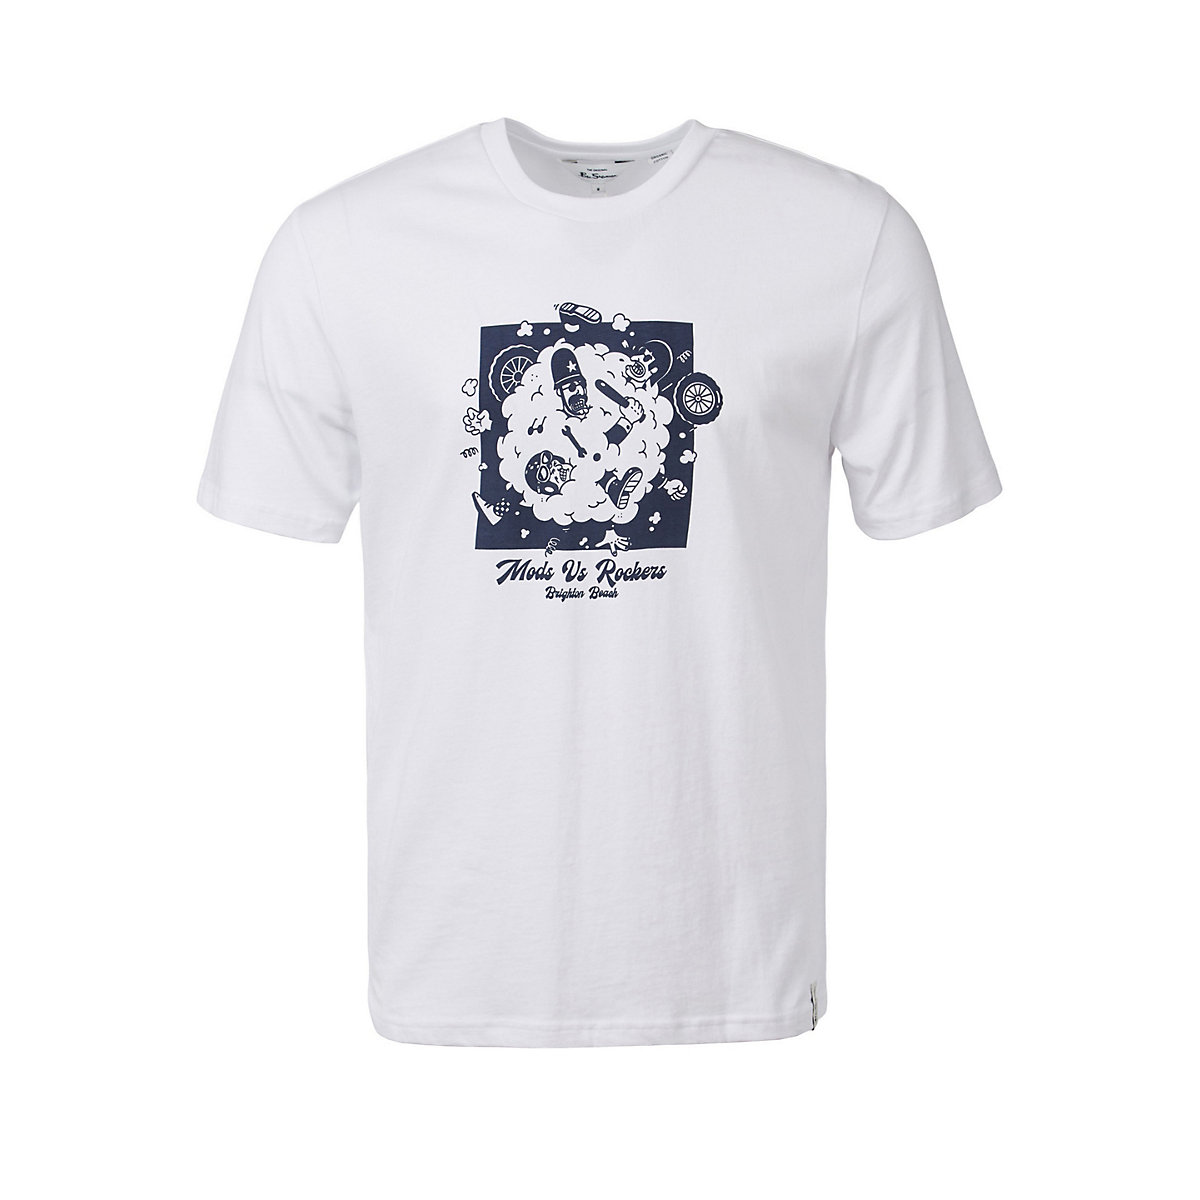 BEN SHERMAN® Mods V Rockers Tee T-Shirts weiß